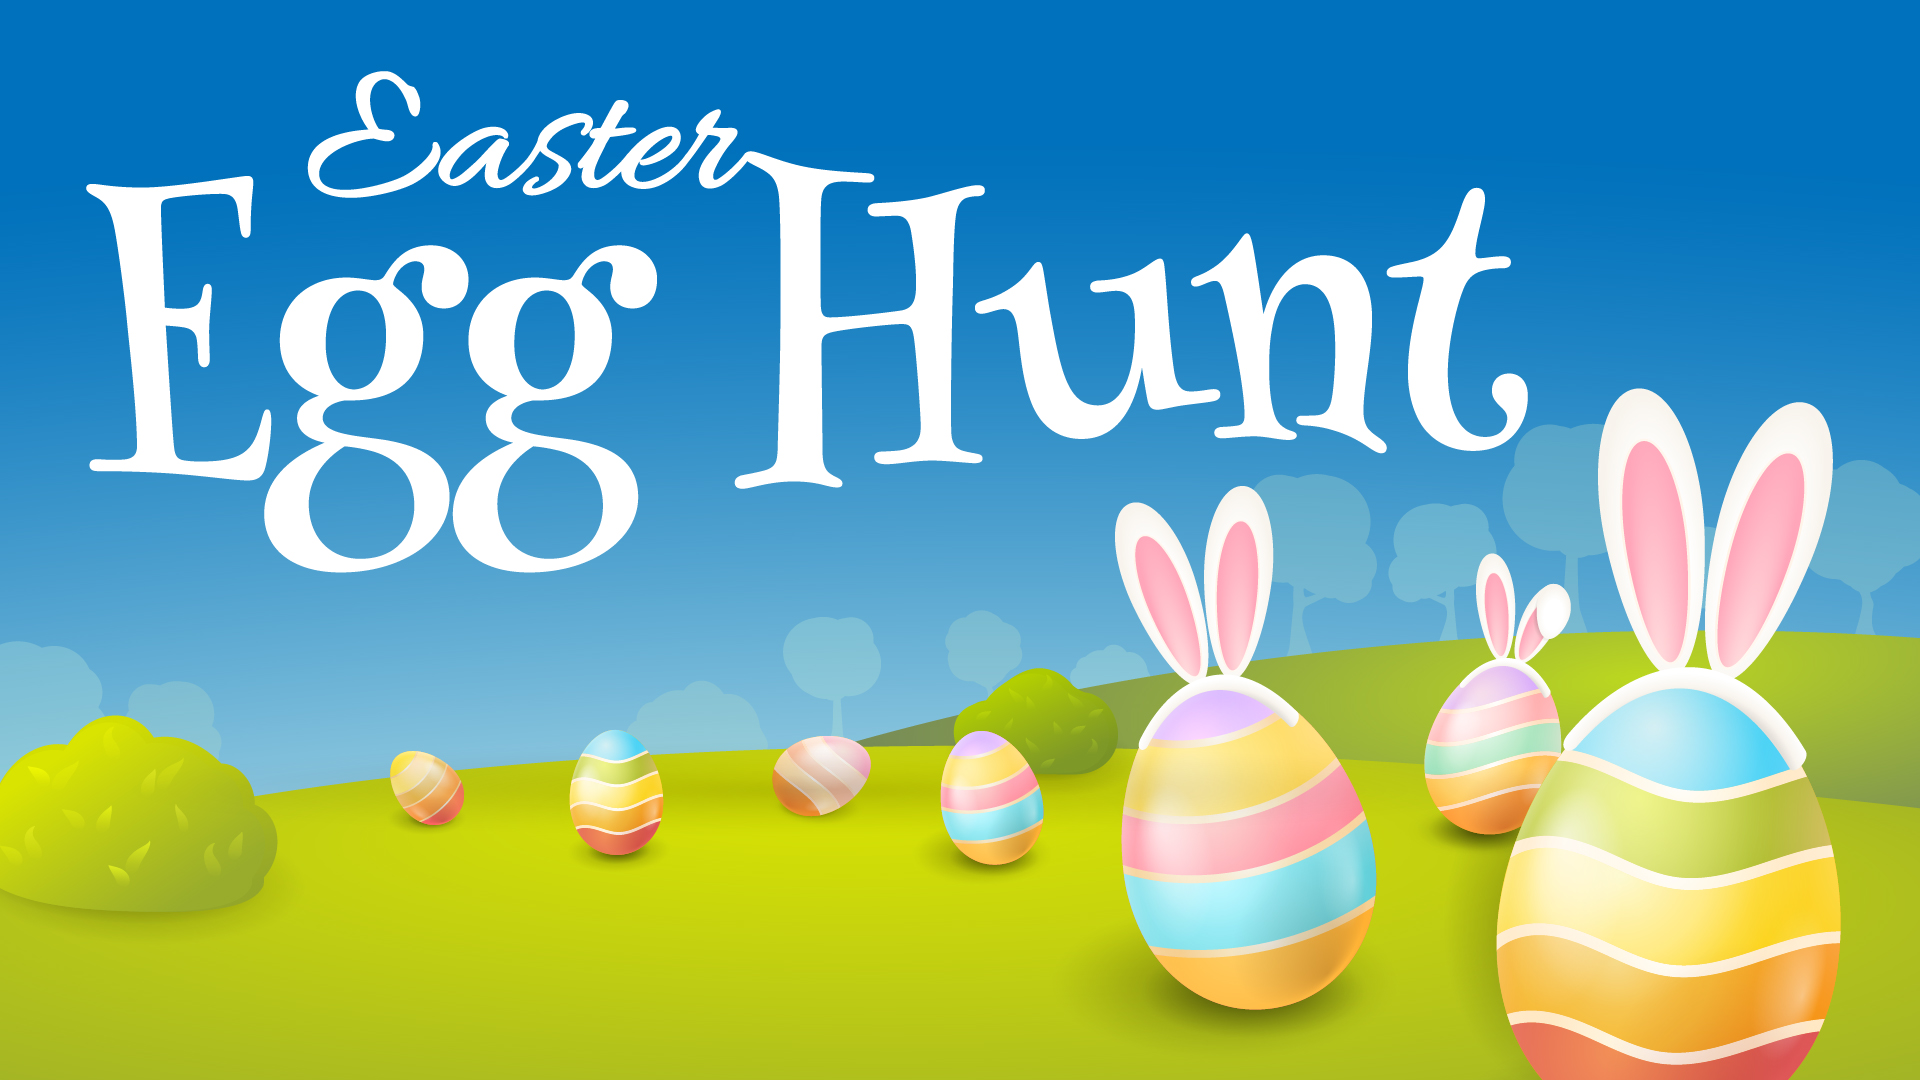 Children's Easter Egg Hunt - Armstrong